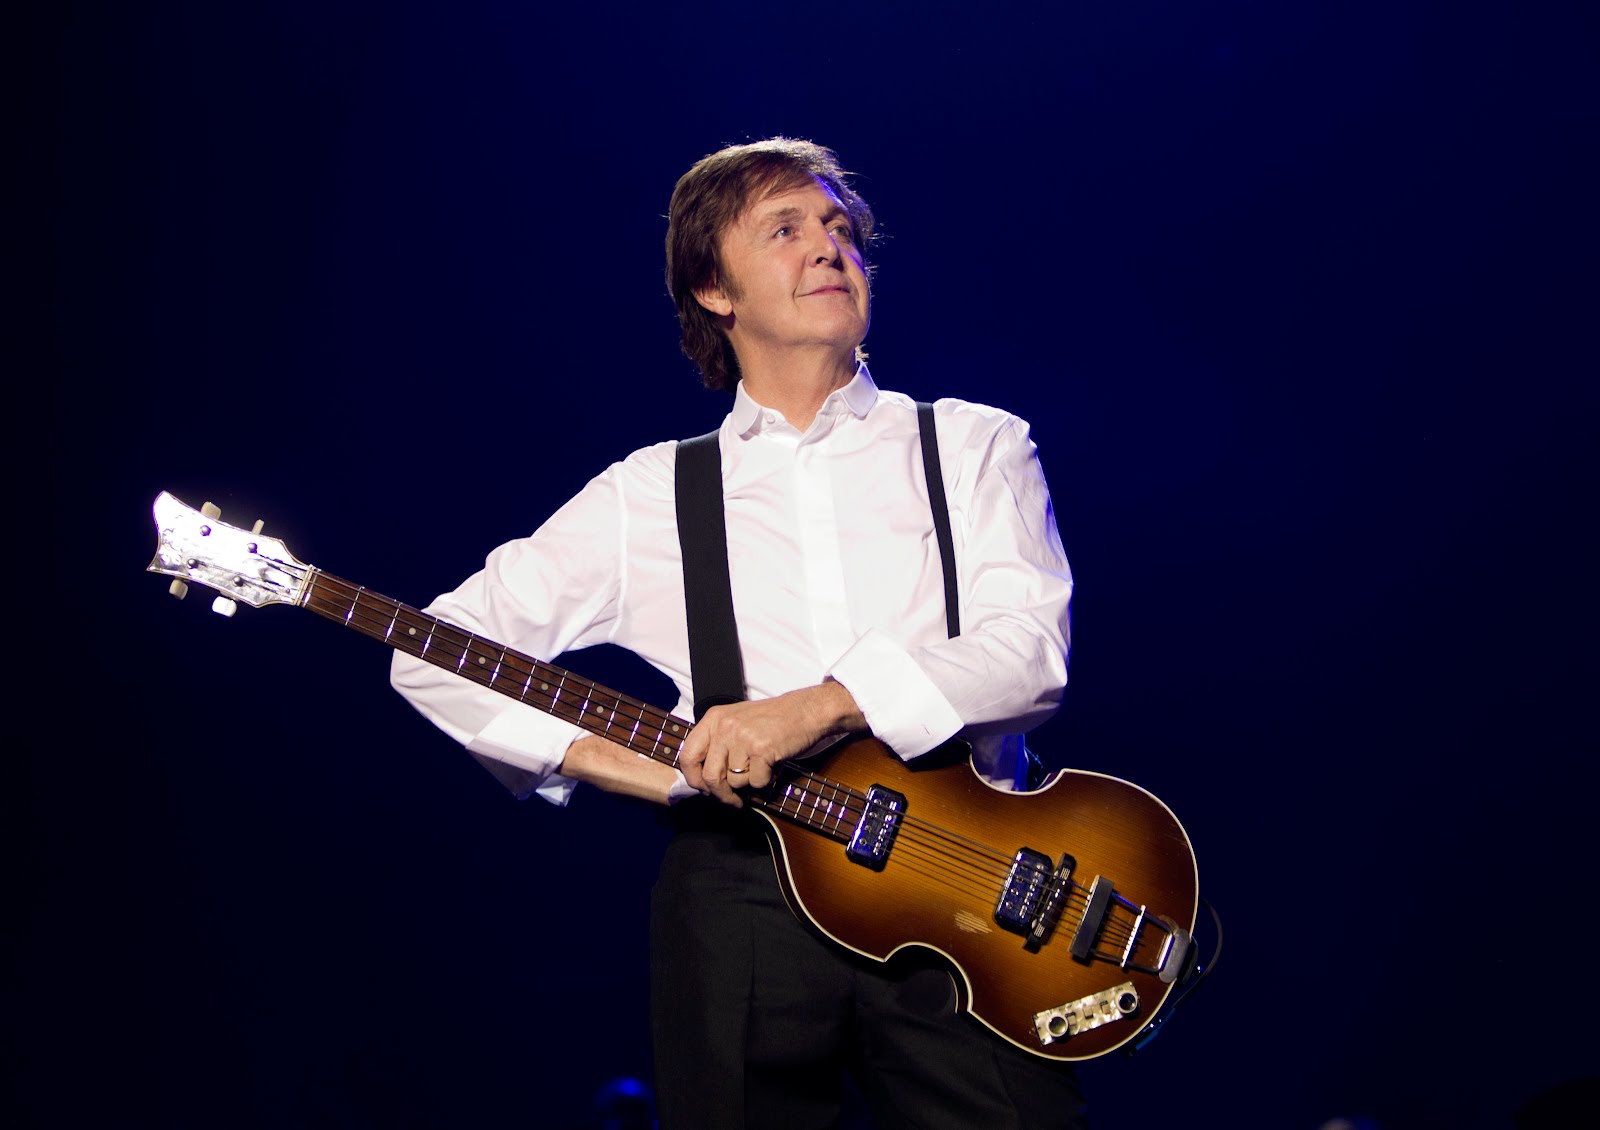 Shows: Paul McCartney se apresenta em Fortaleza, diz jornal